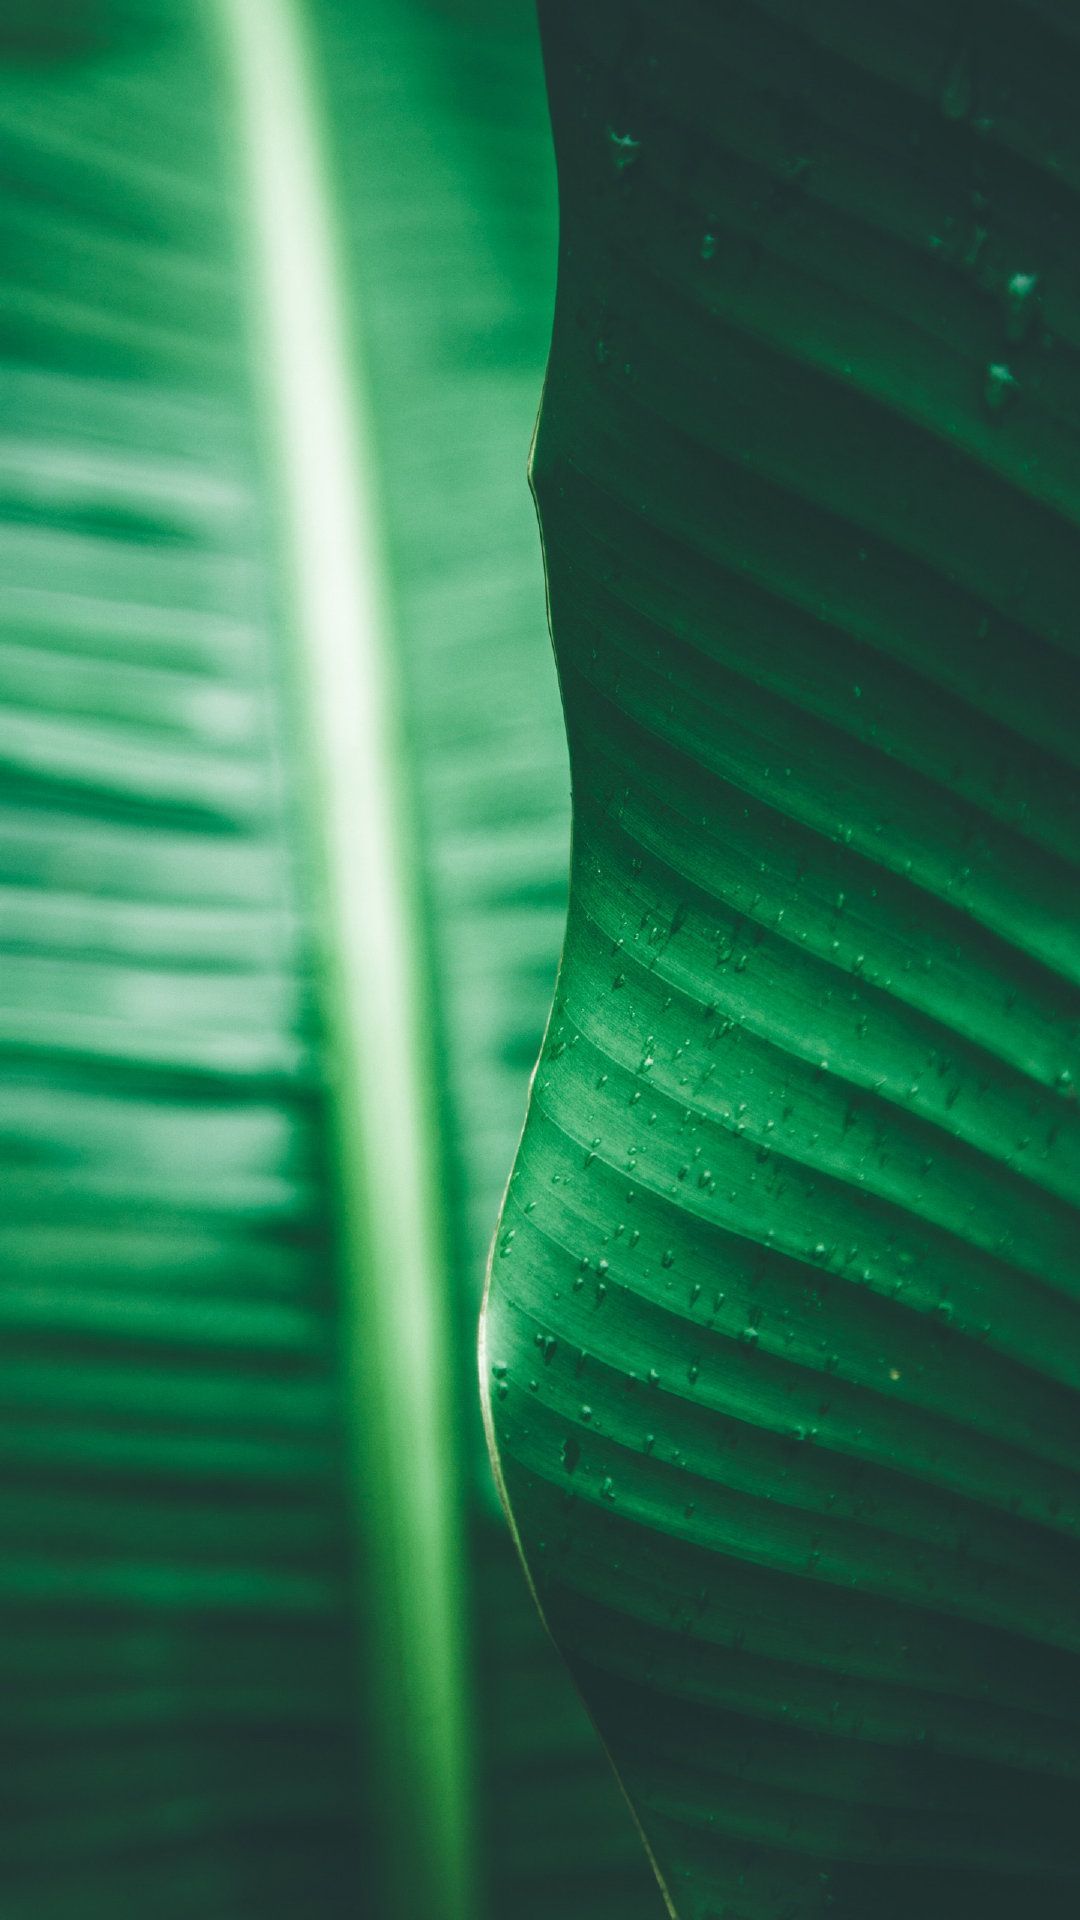 Banana leaf green eye protection landscape. Wallpaper Background #Wallpaper #Background #iPhone #Phone. Leaves wallpaper iphone, Lock screen picture, Zen picture